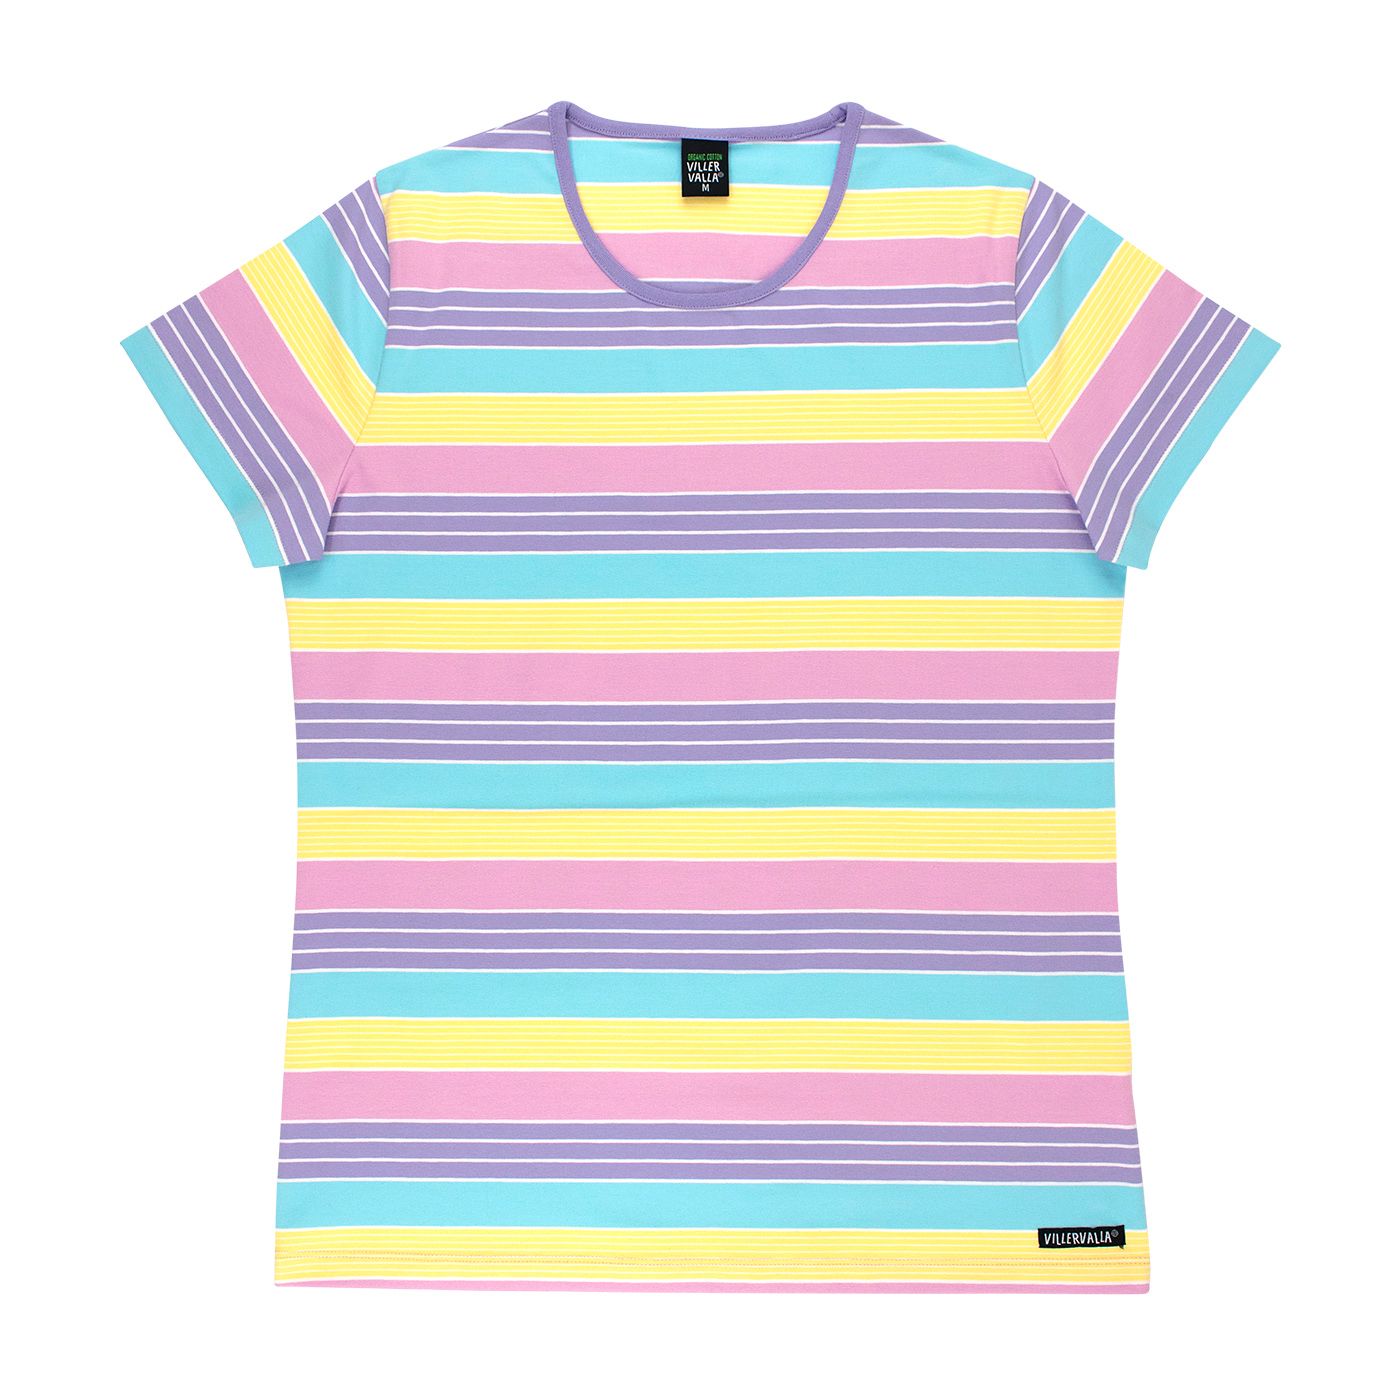 Adult's Multi Stripe Short Sleeve Shirt in California-Villervalla-Modern Rascals